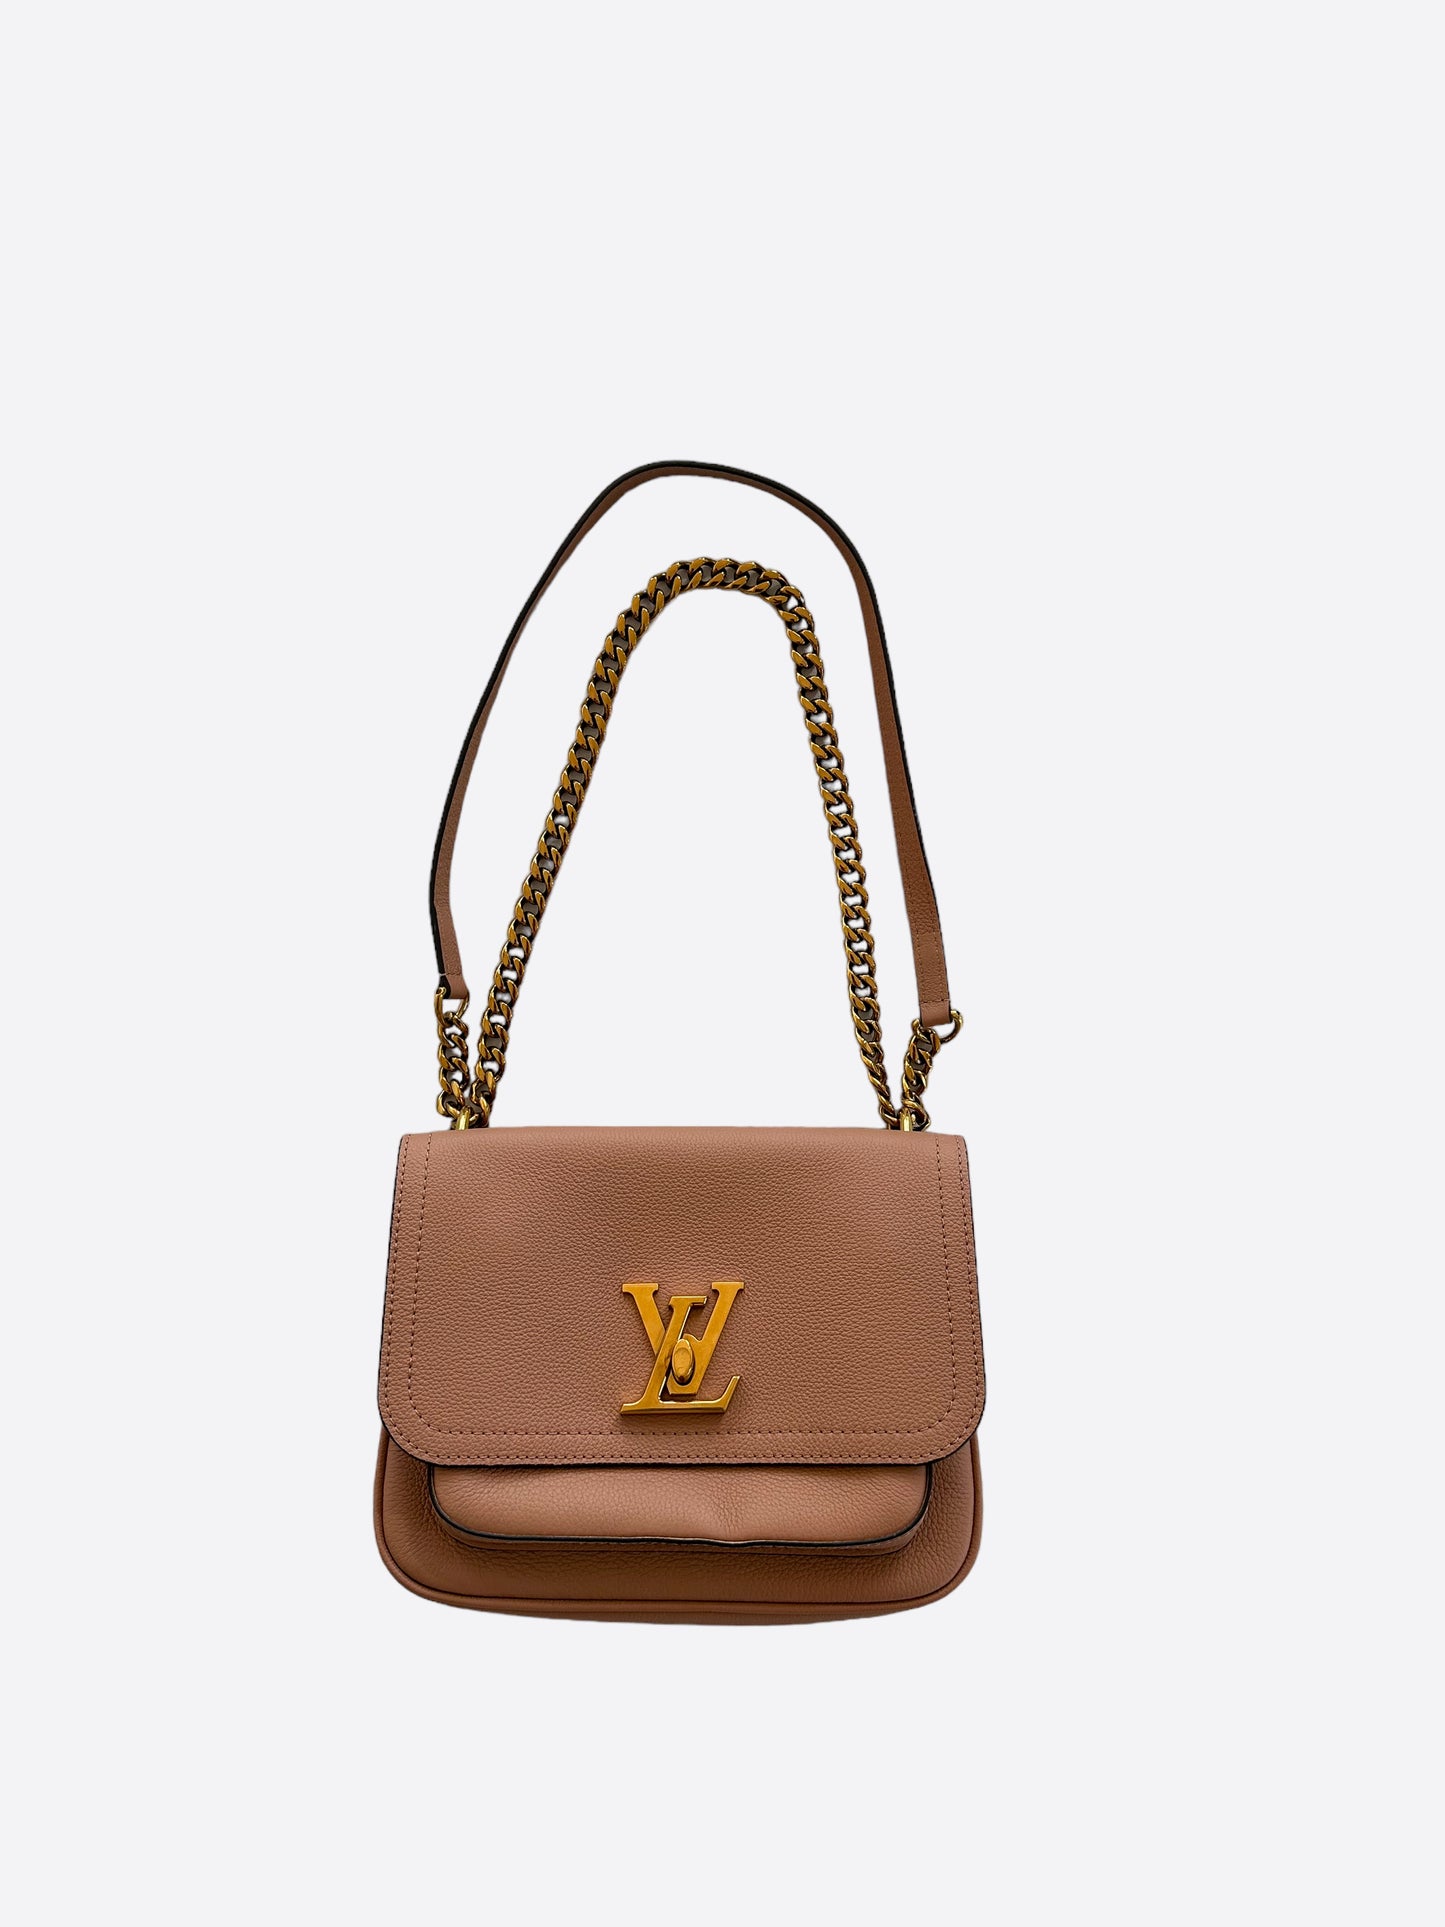 Louis Vuitton, Bags, New In Stores Louis Vuitton Lockme Pm Chain Bag